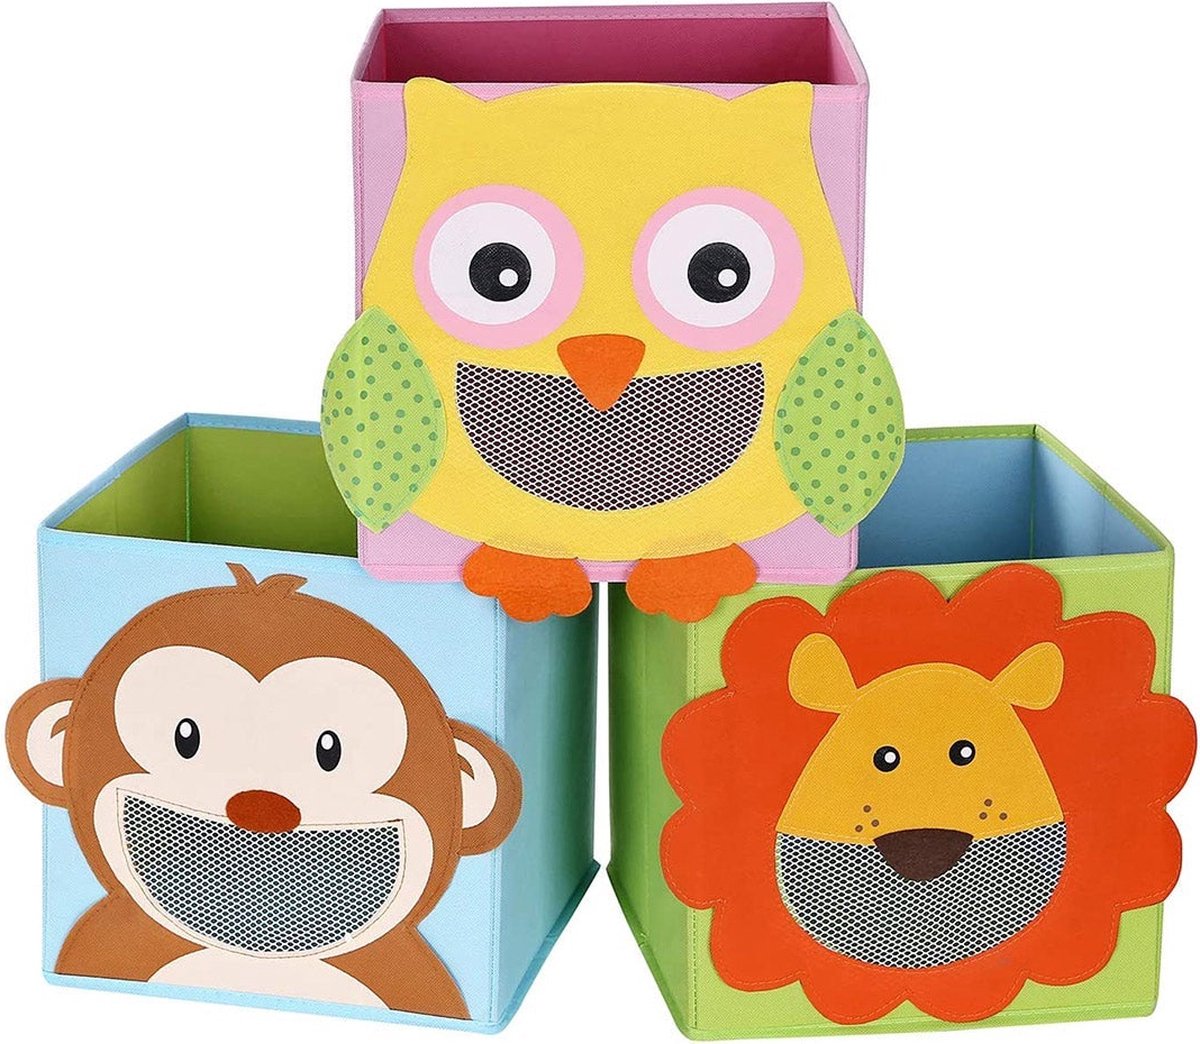 Opbergbox - Set van 3 - Speelgoeddozen - Speelgoed organizer - Opvouwbare kubussen